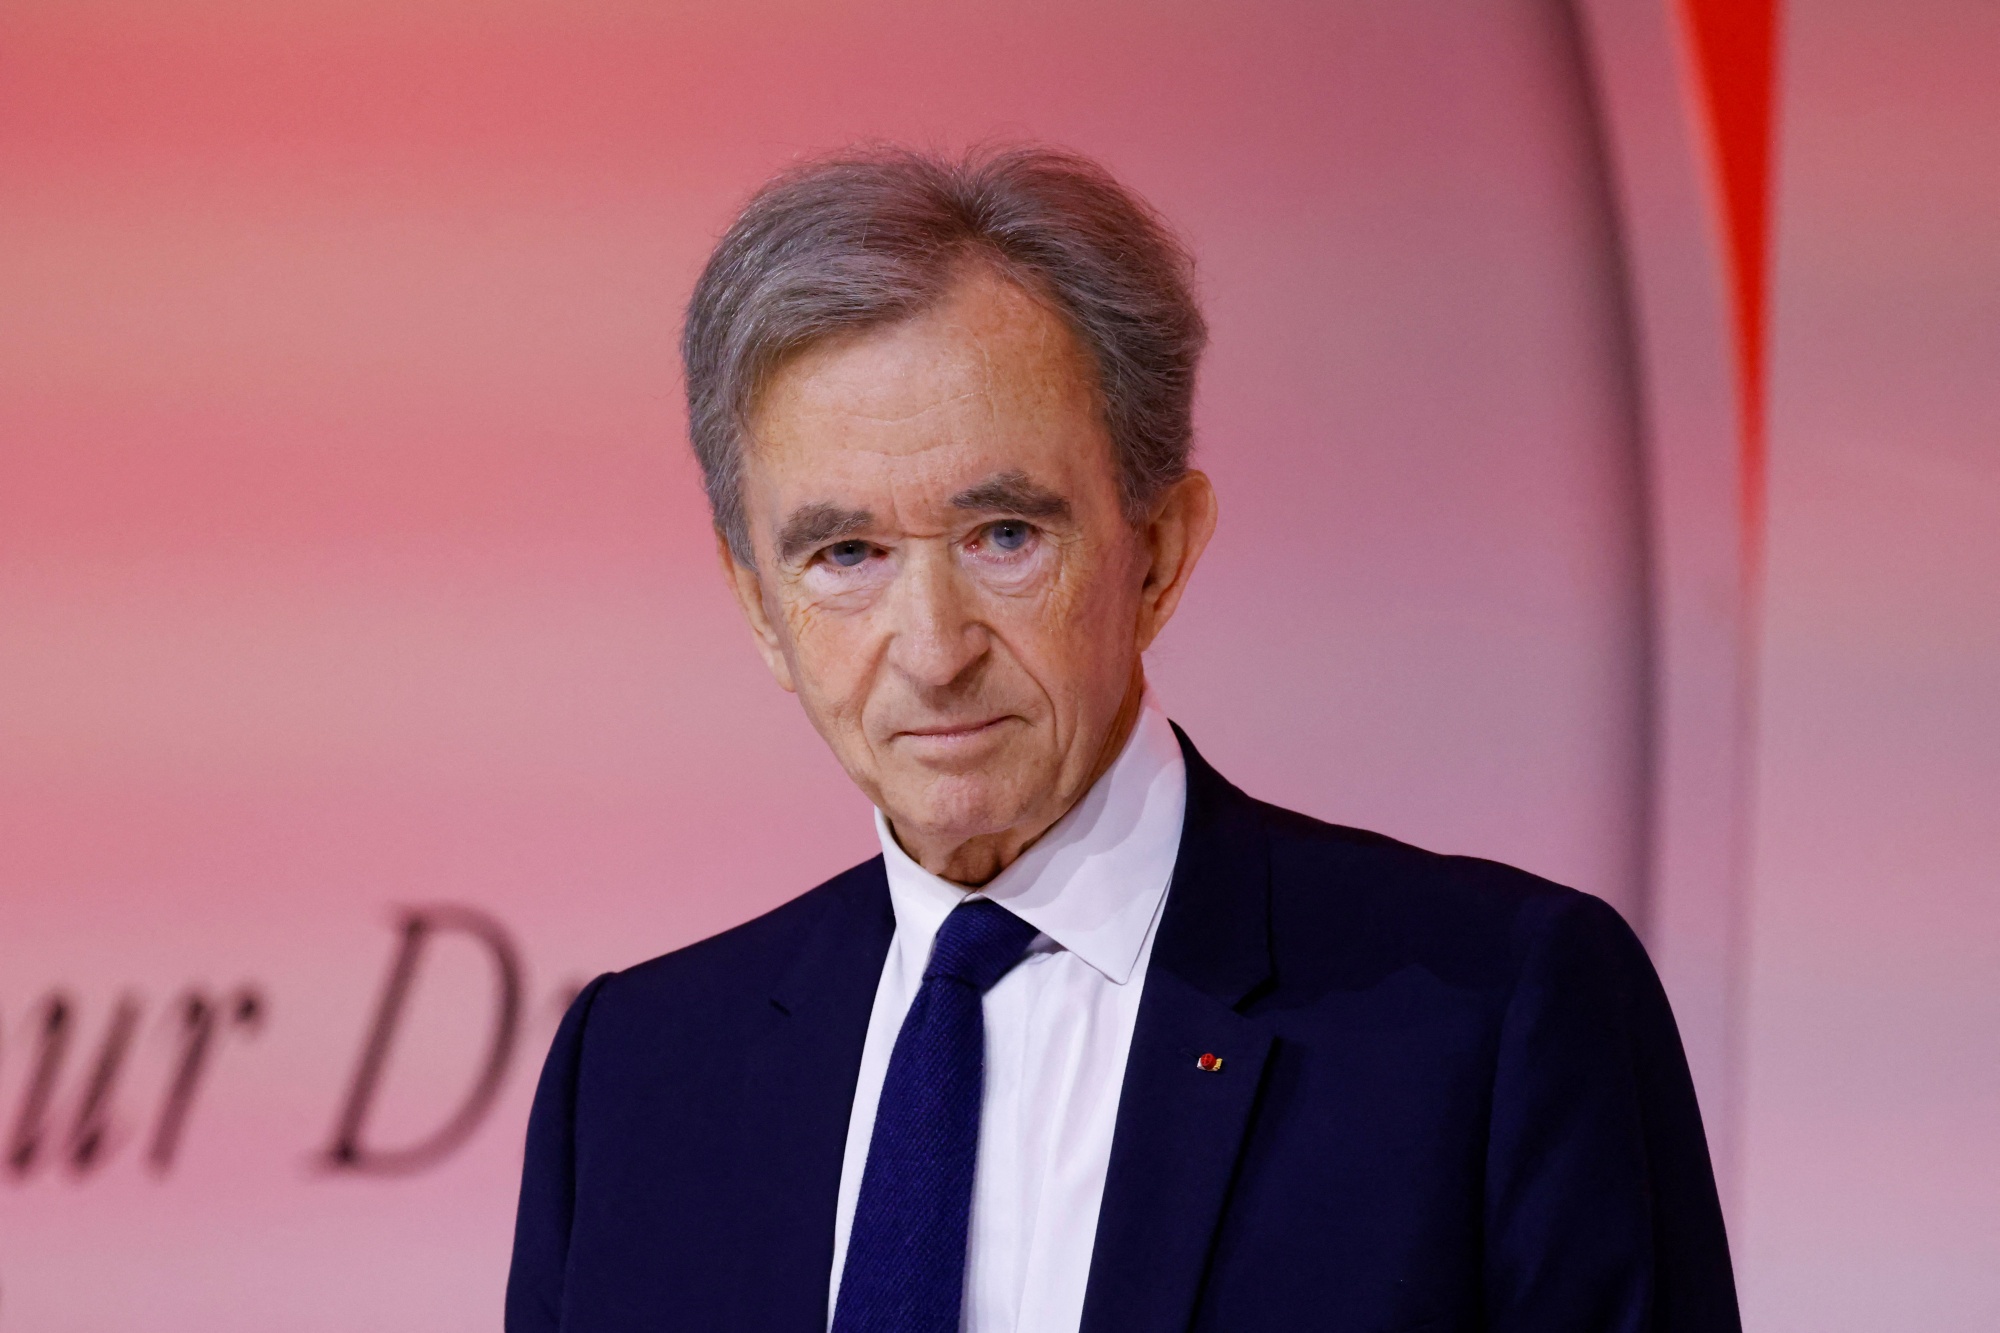 Video: Bernard Arnault Succession: Who Will Lead LVMH Next